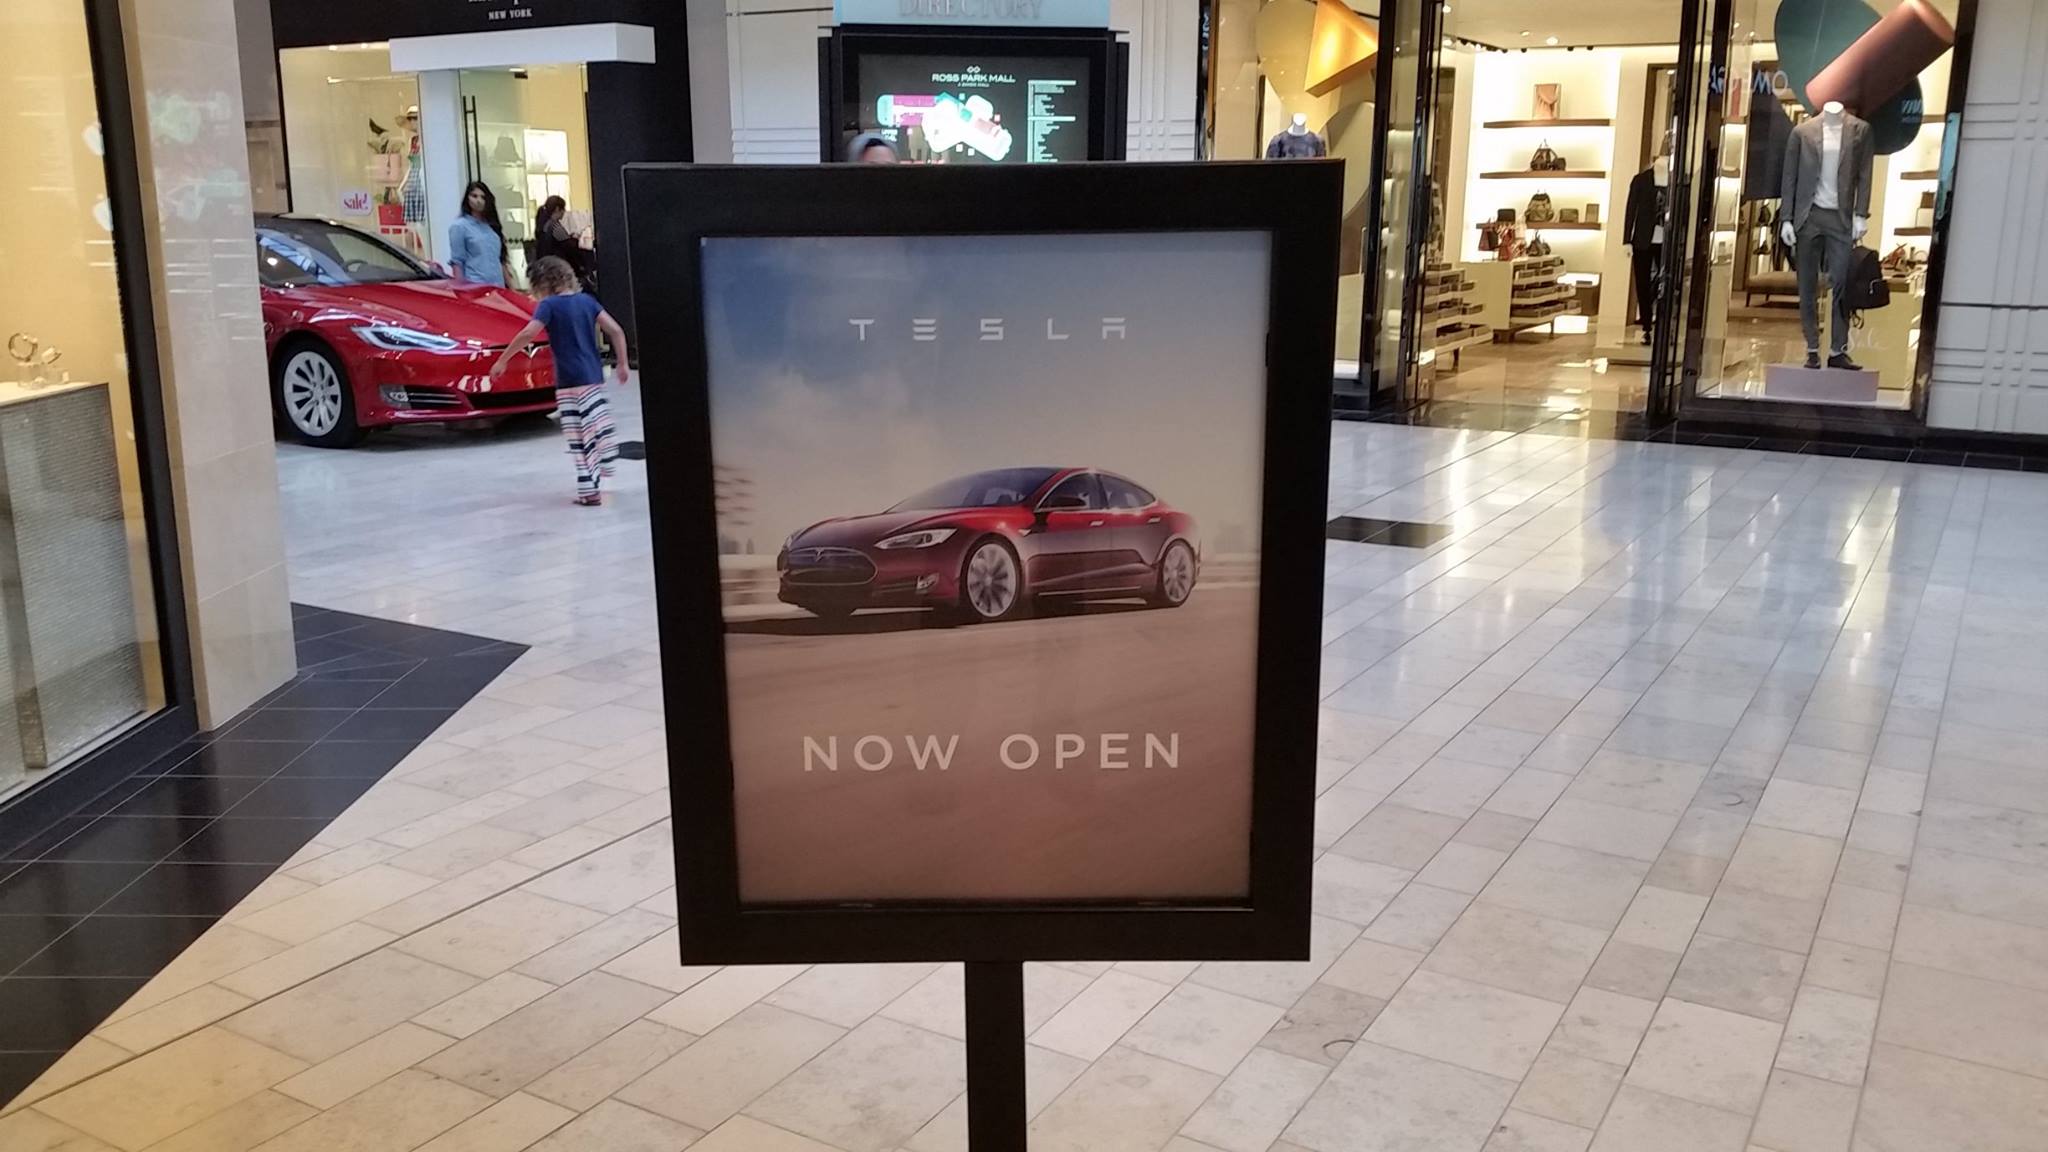 TeslaPittsburgh.com: Ross Park Mall Tesla Grand Opening